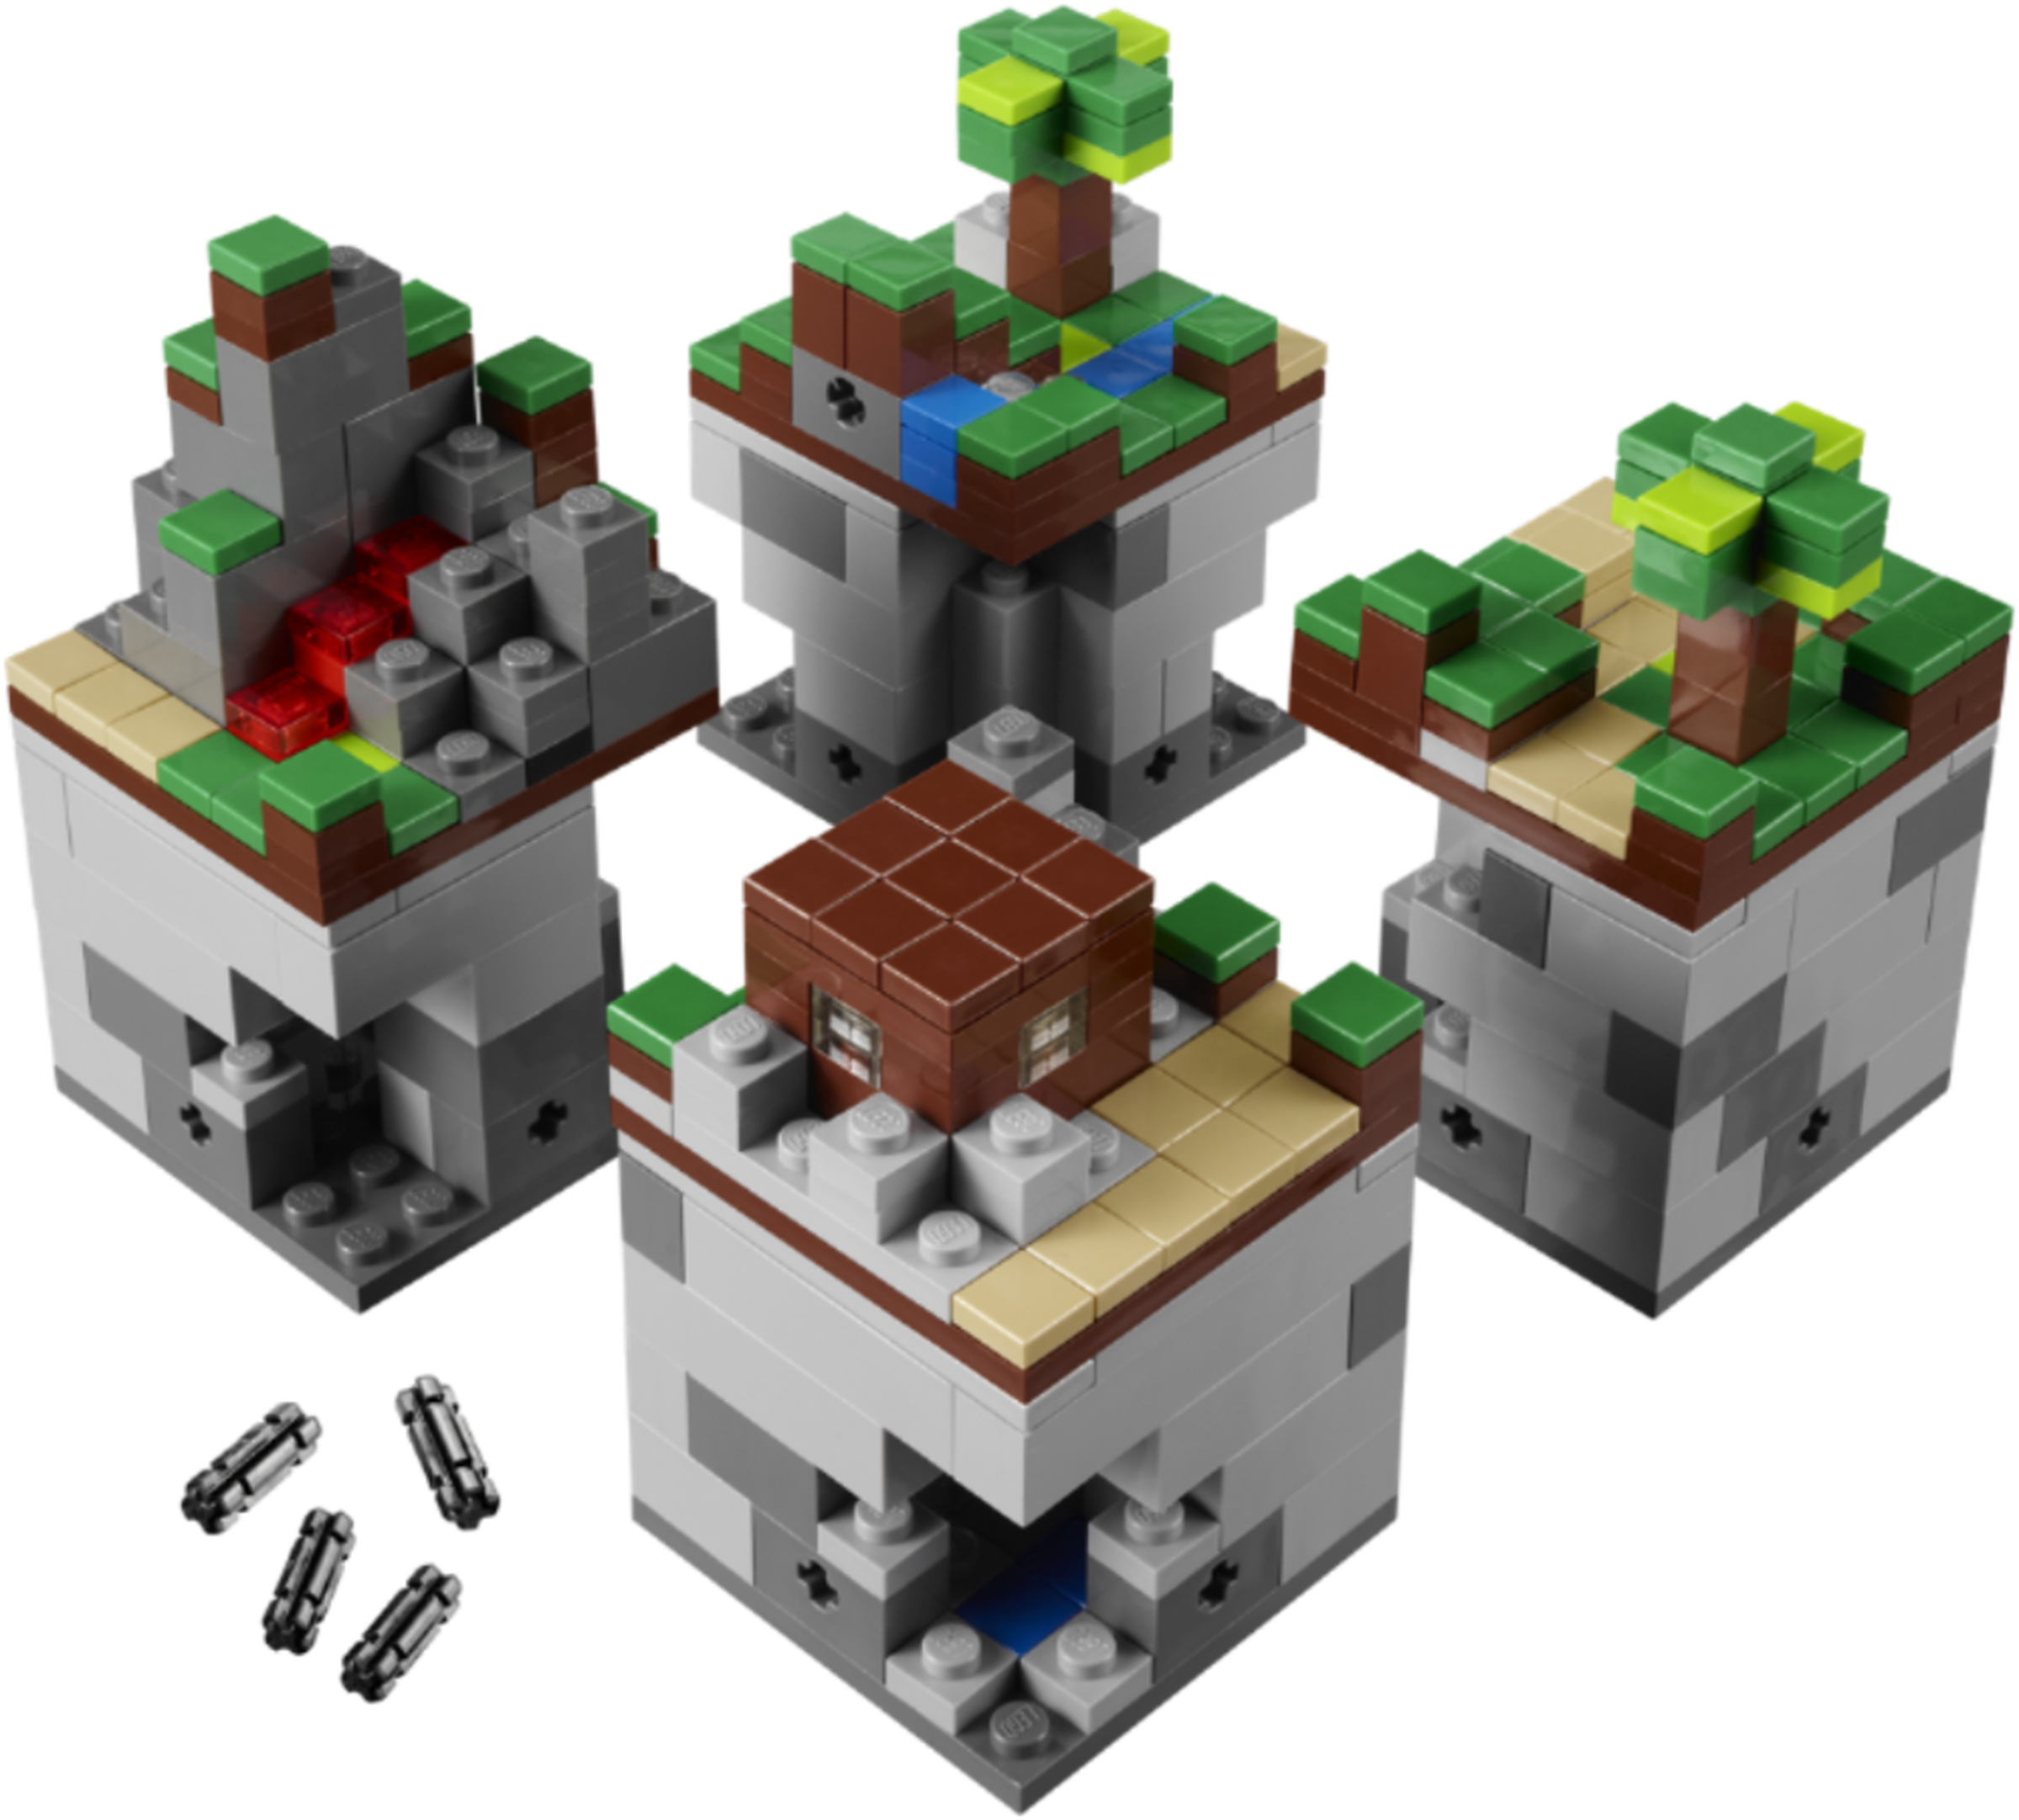 Lego's Minecraft set